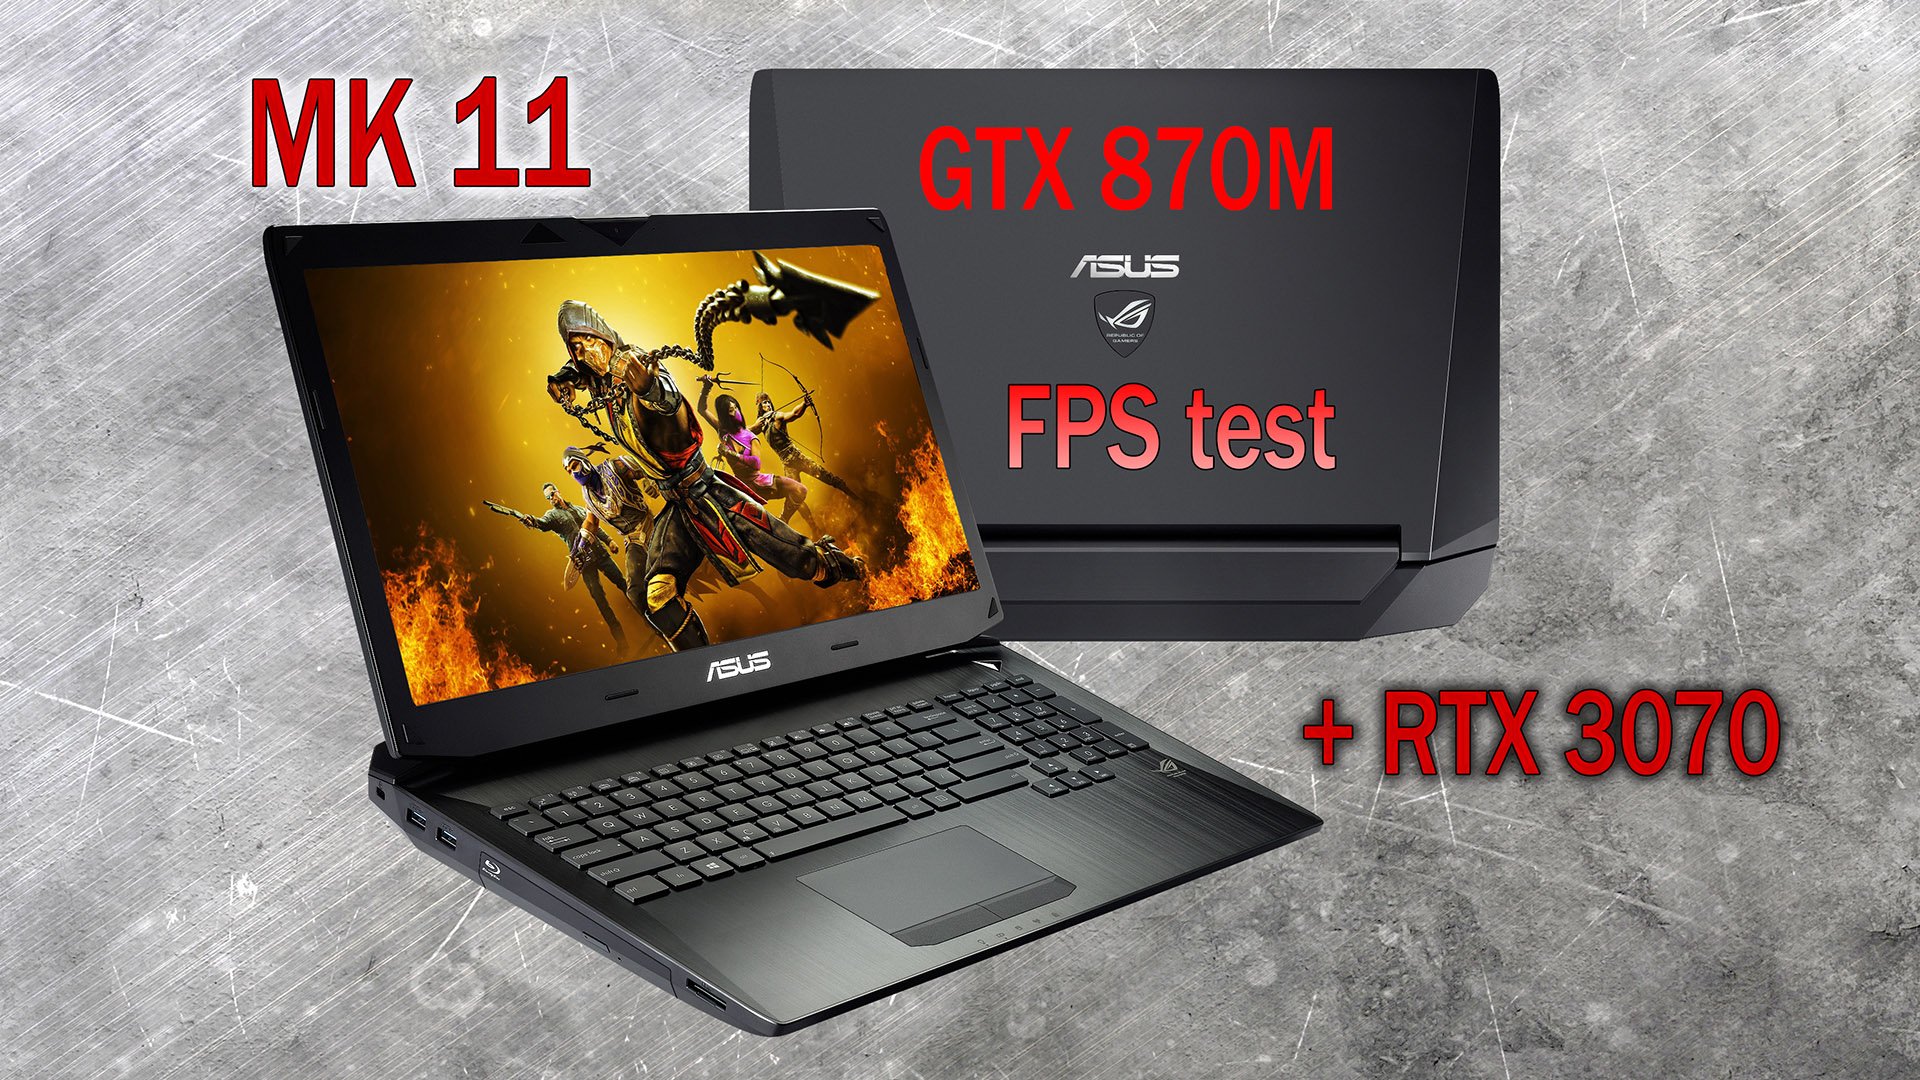 Mortal Kombat 11. fps test на ноутбуке Asus g750js (gtx870m) + rtx3070